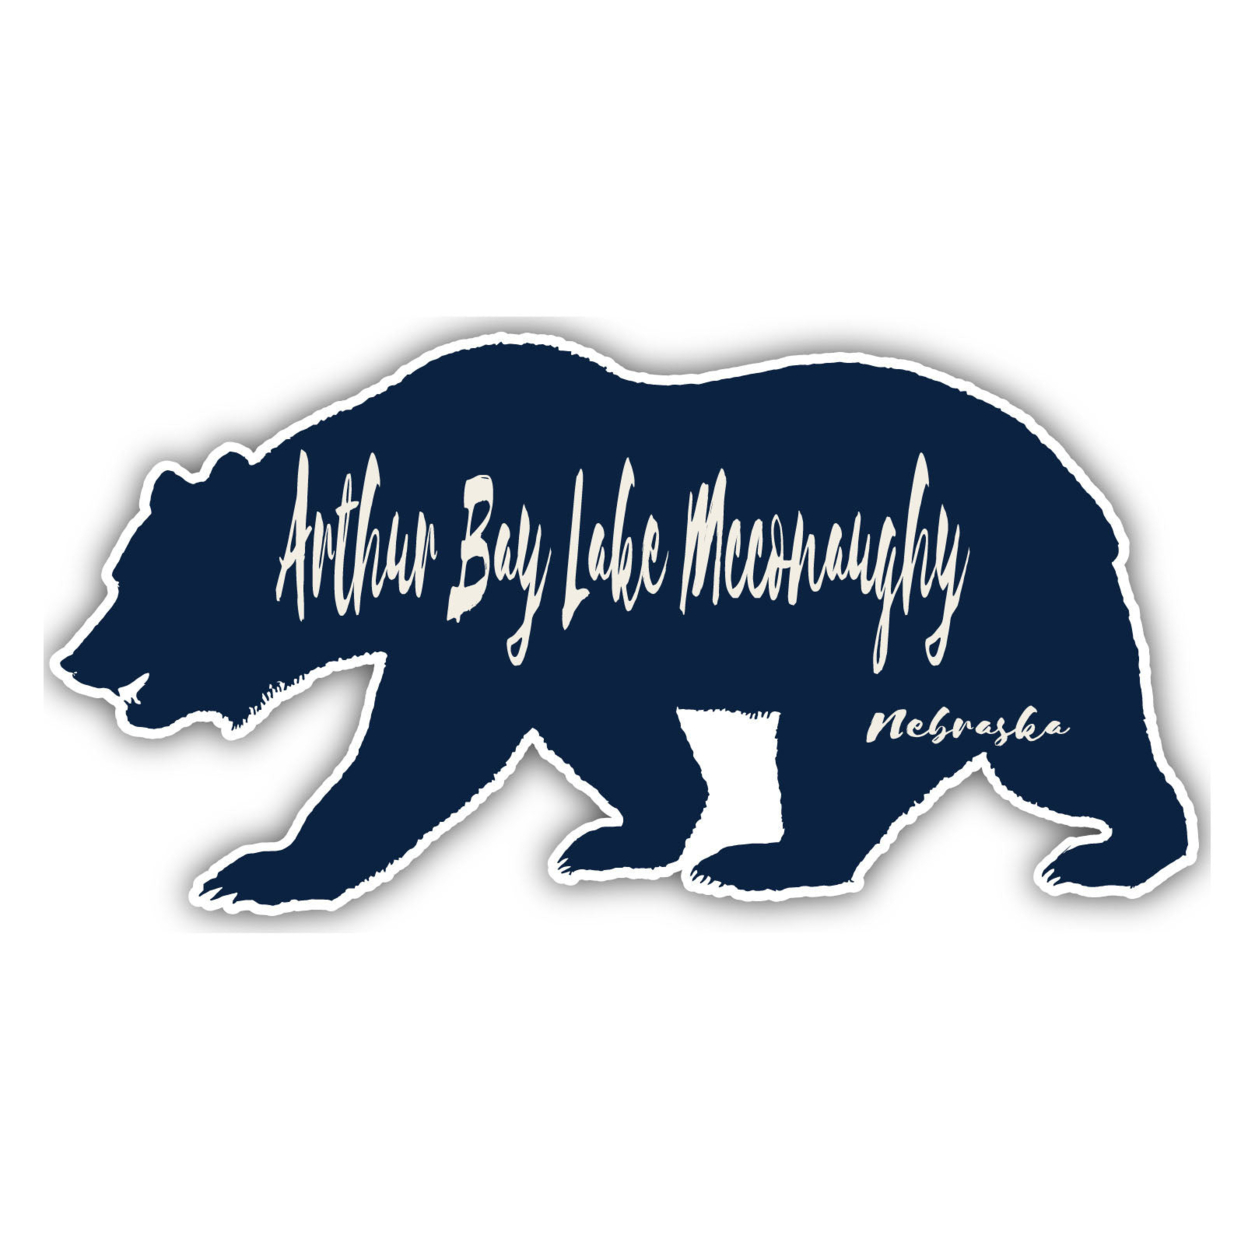 Arthur Bay Lake Mcconaughy Nebraska Souvenir Decorative Stickers (Choose Theme And Size) - 4-Pack, 12-Inch, Bear